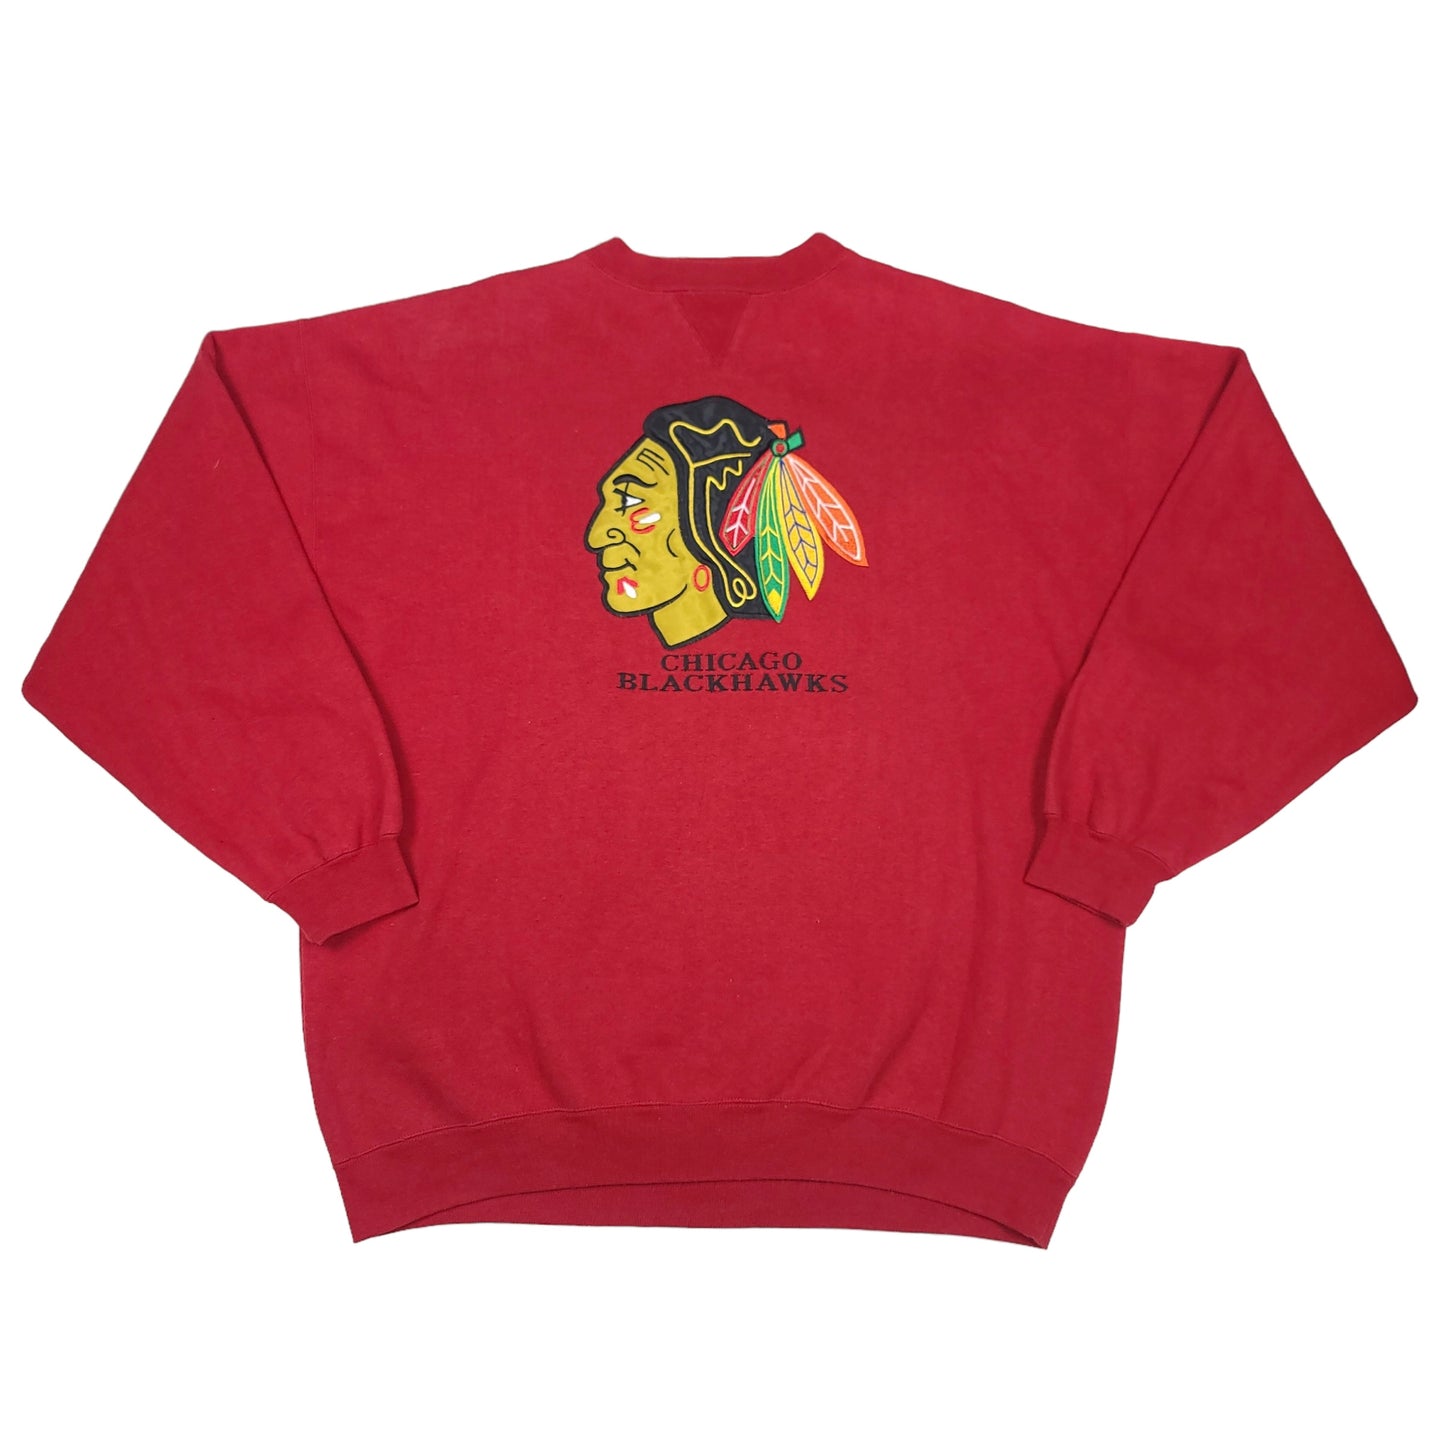 Chicago Blackhawks Red Sweatshirt